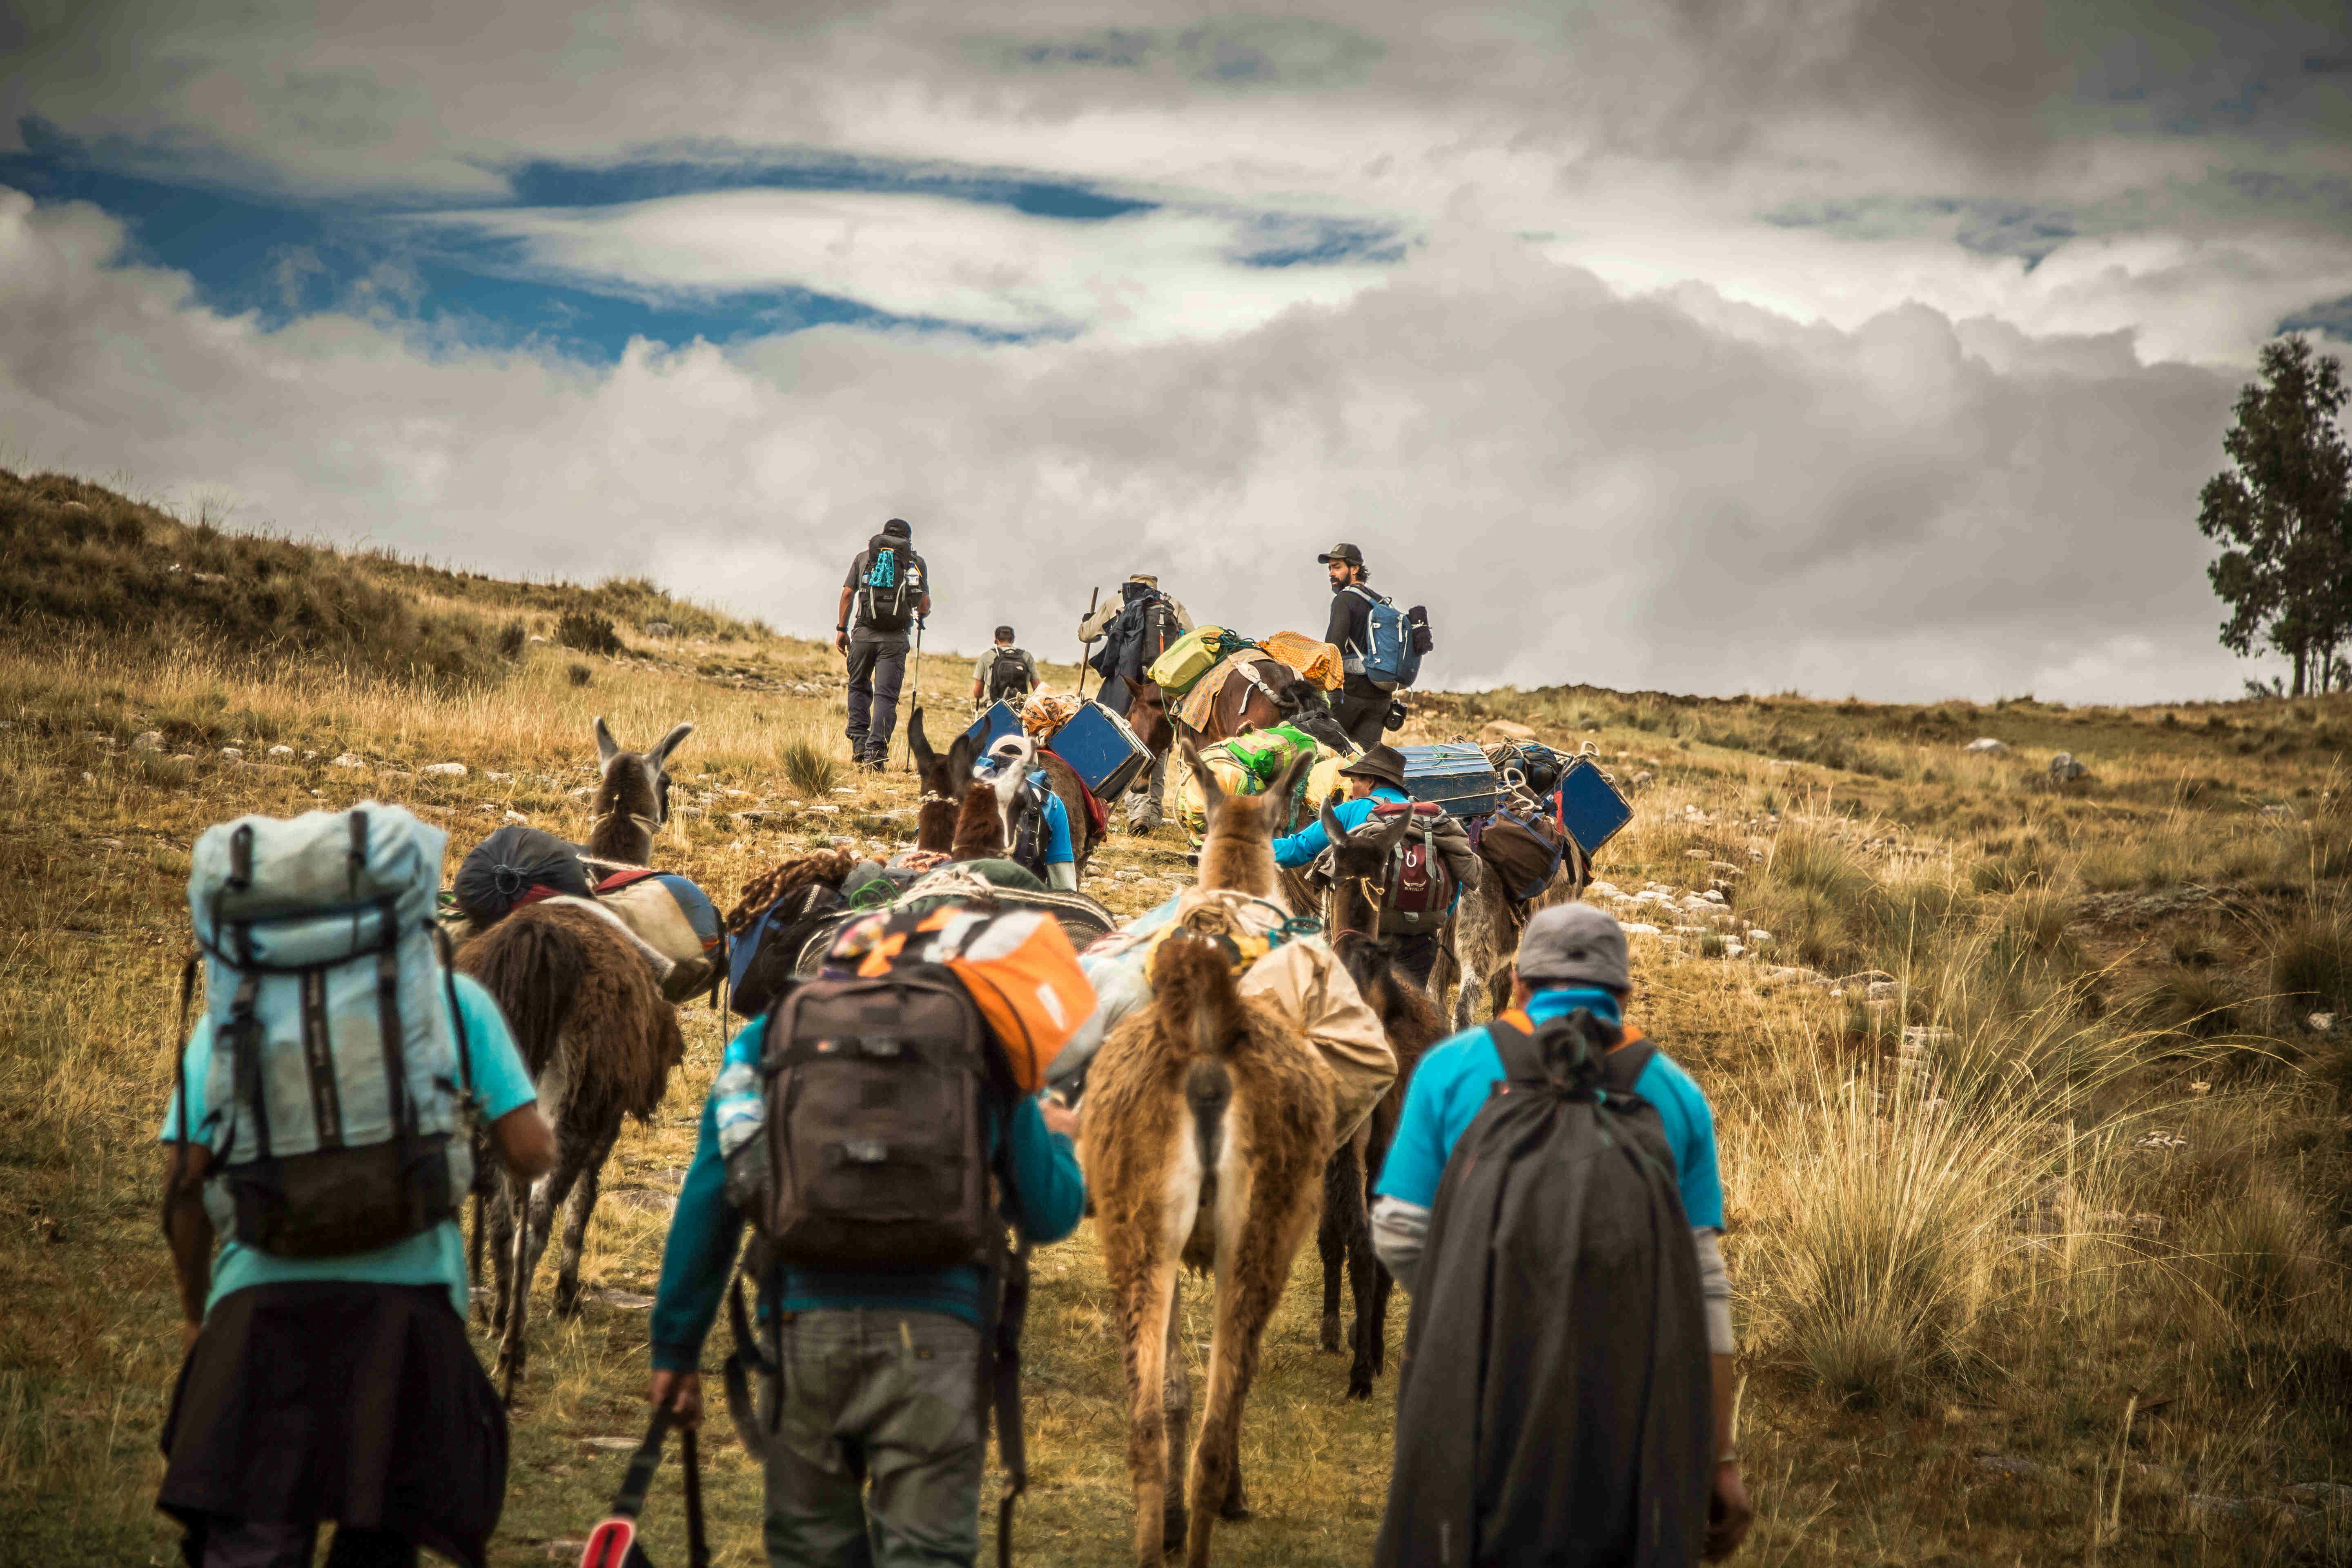 Hiking the Great Inca Trail in northern Peru